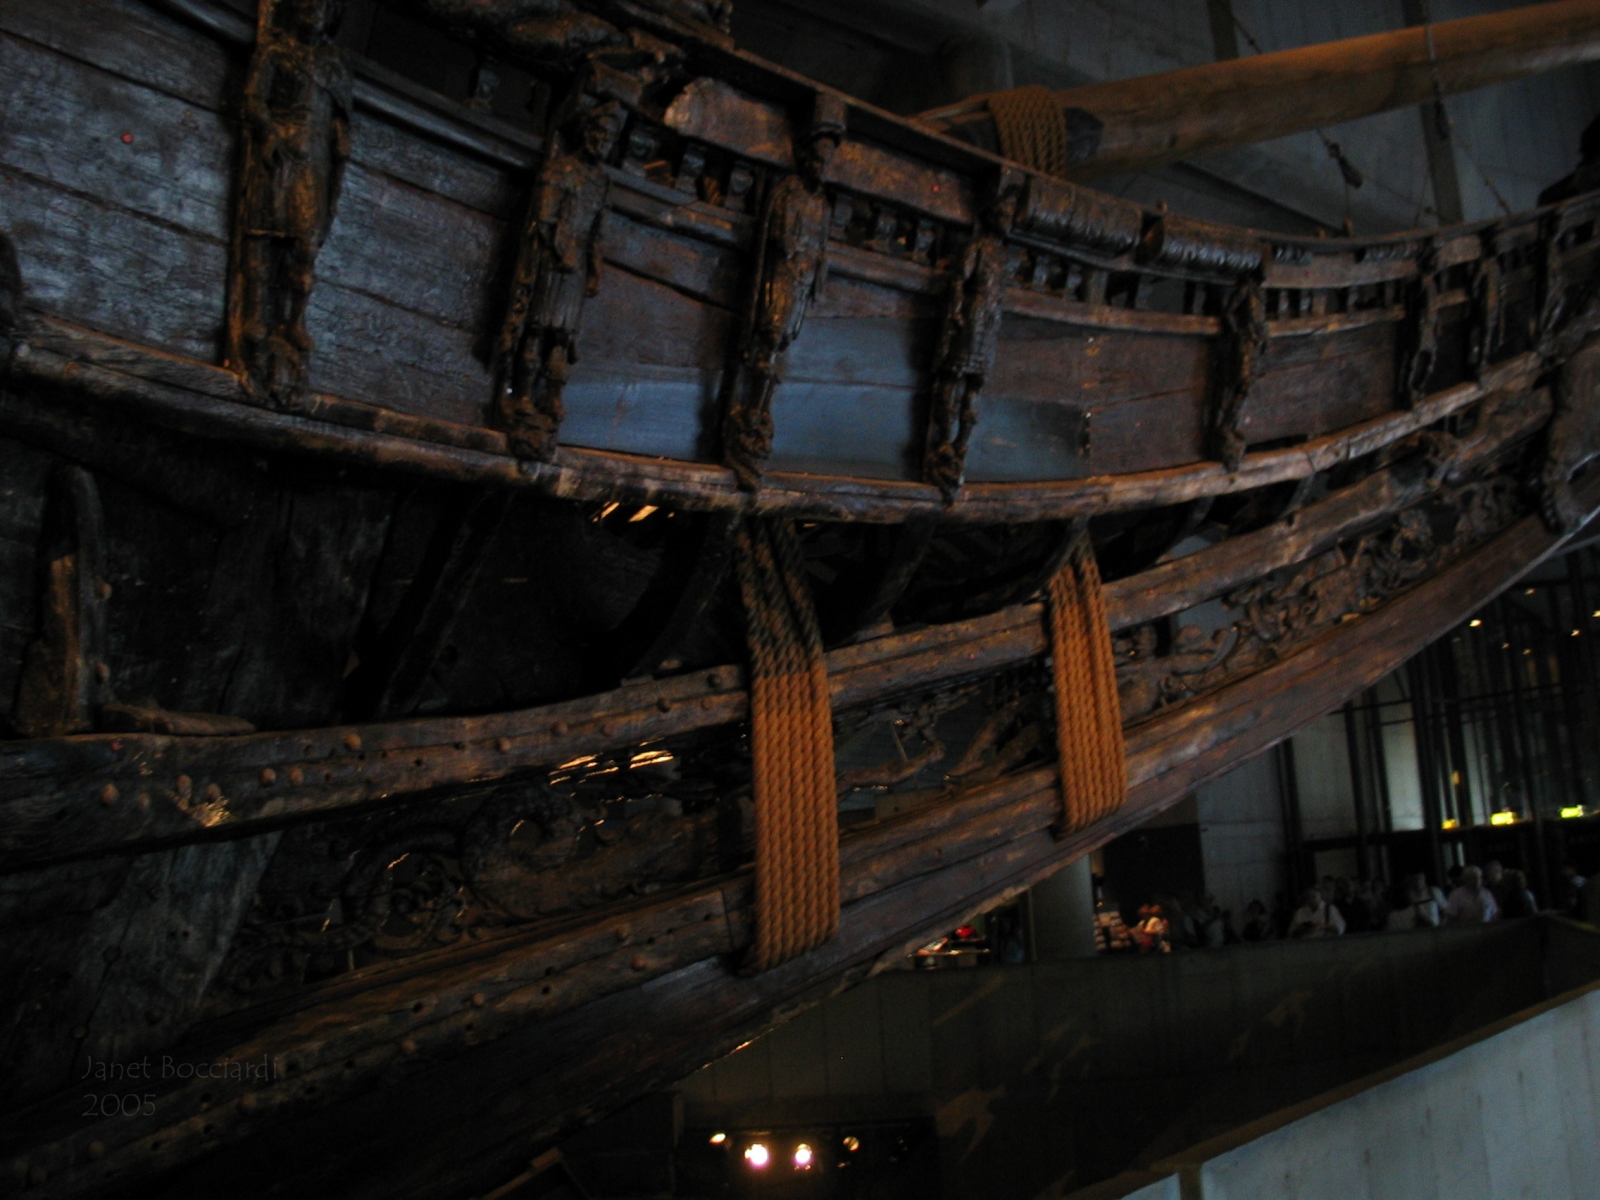 Vasa Wooden ship